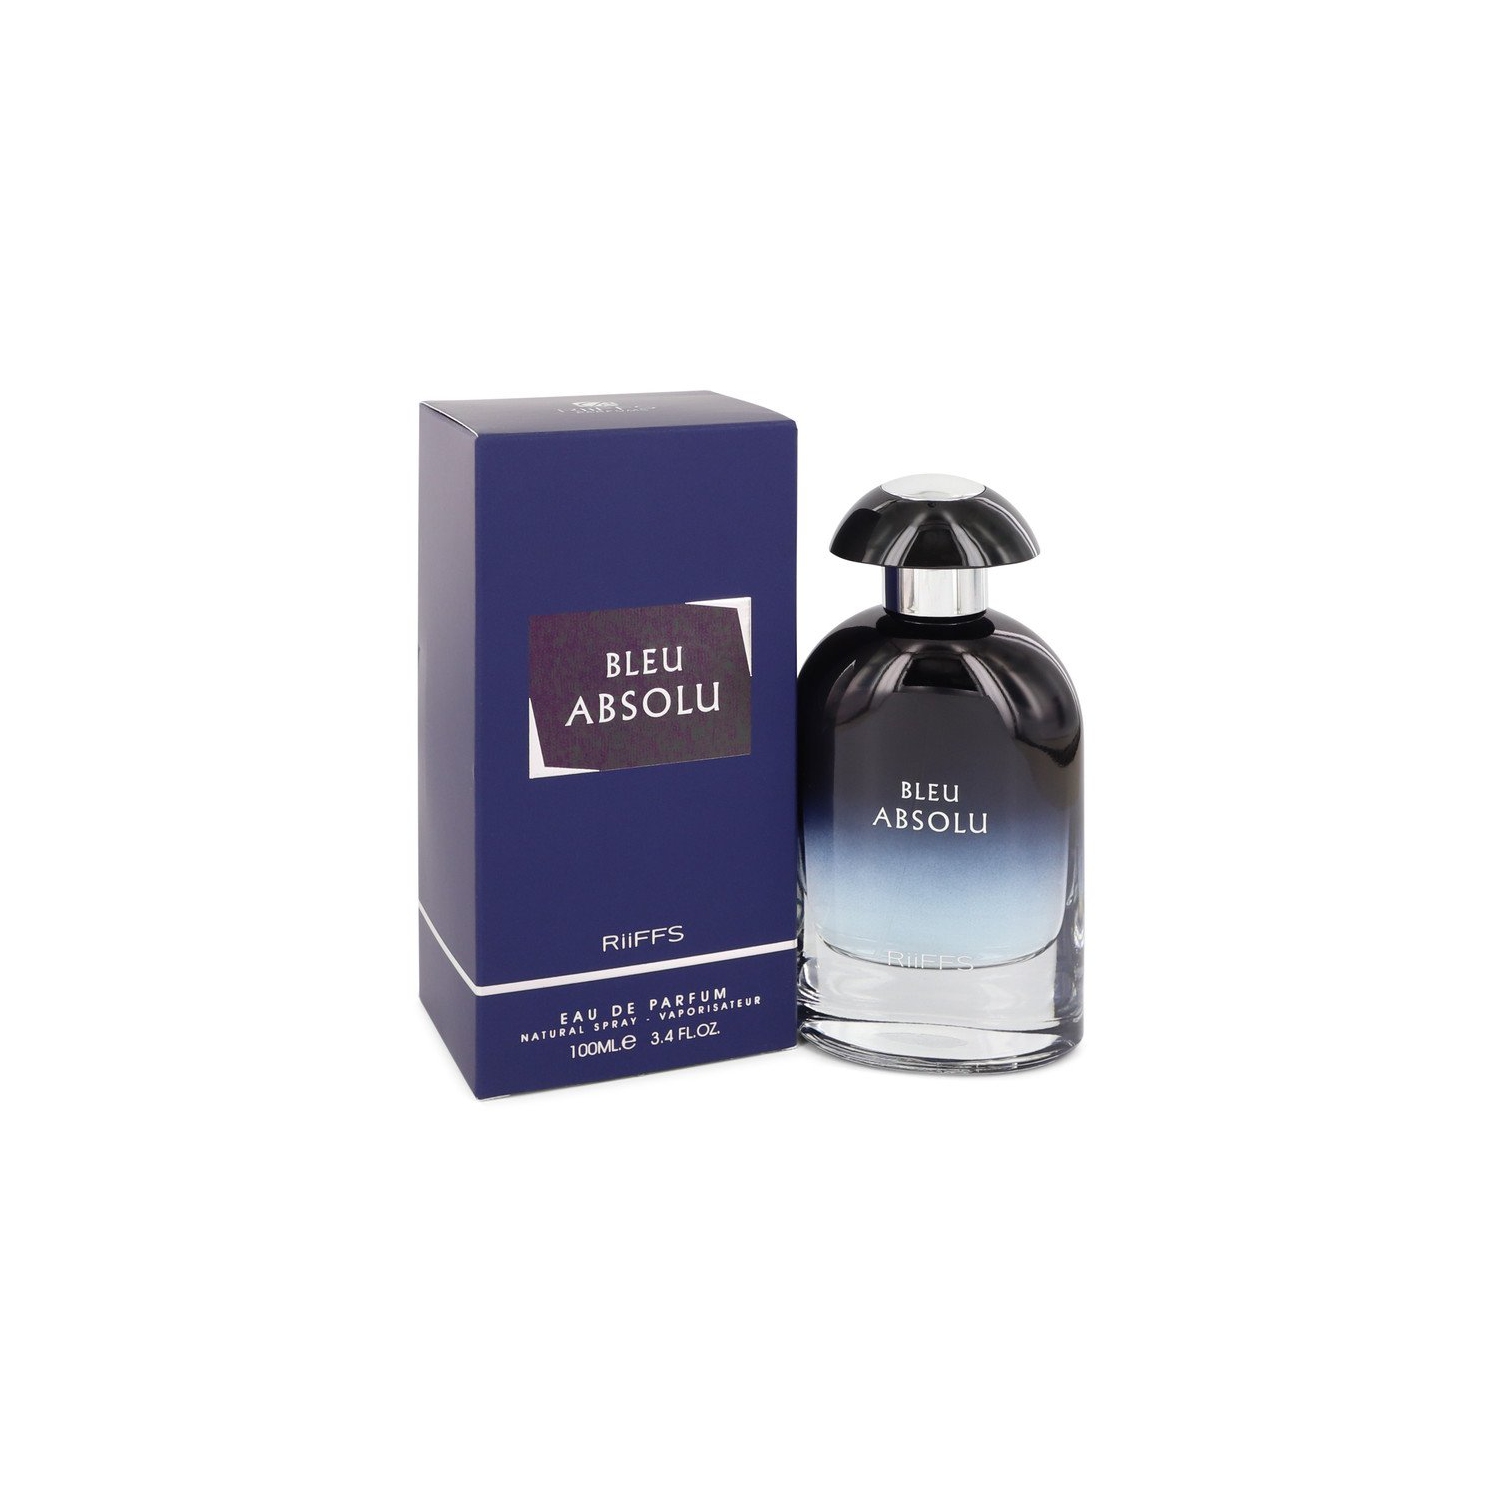 Bleu Absolu by Riiffs Eau De Parfum Spray (Unisex) 3.4 oz